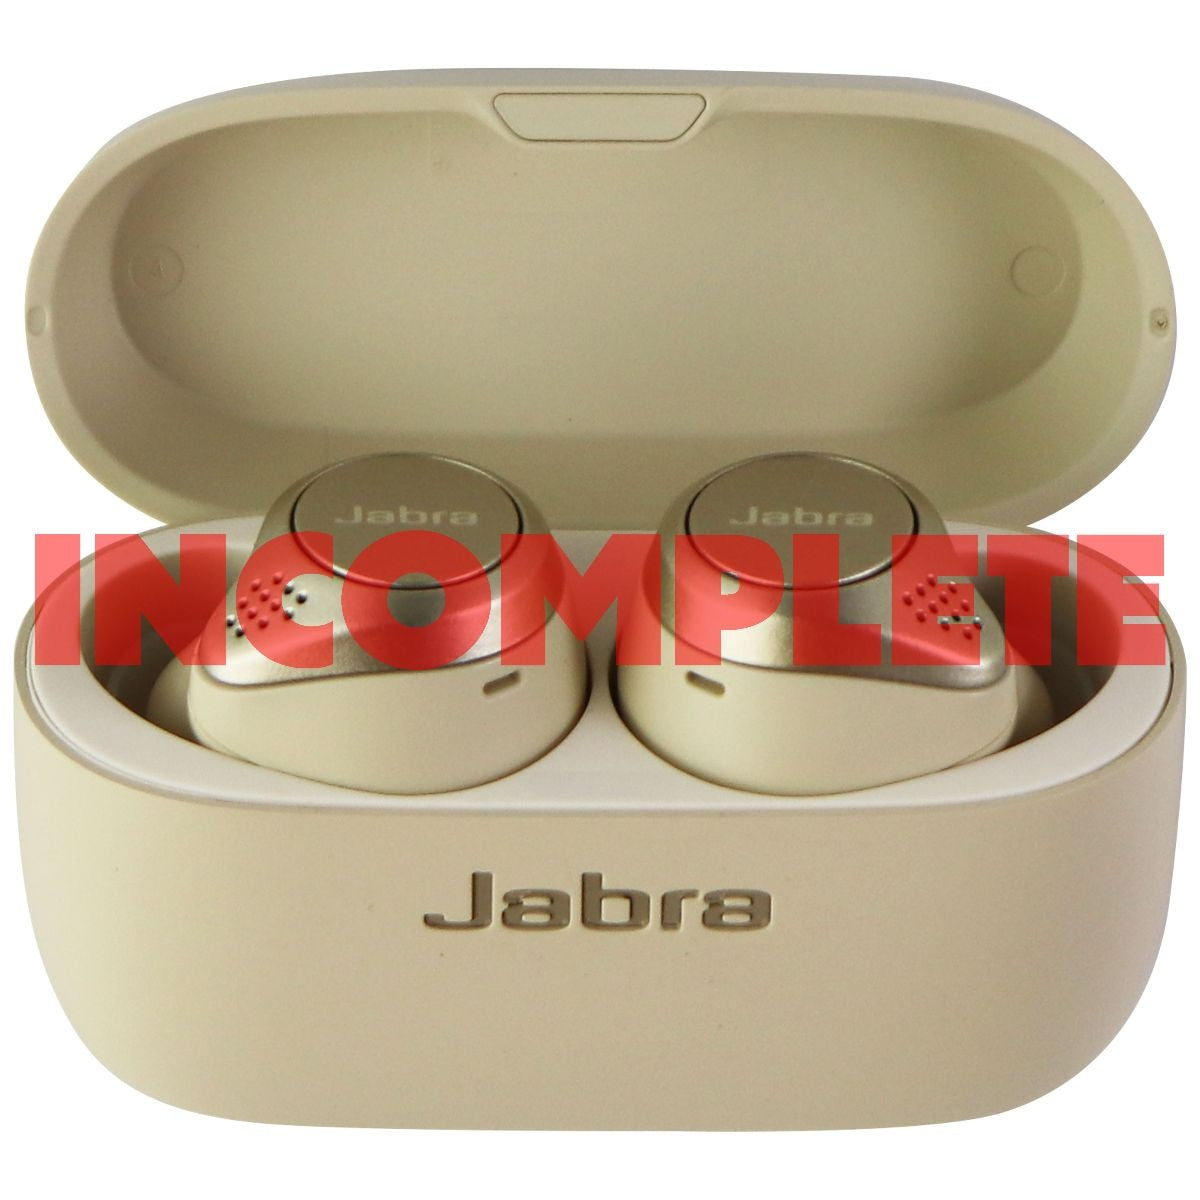 Jabra Elite 75t True Wireless Earbuds with Charging Case - Gold Beige Portable Audio - Headphones Jabra    - Simple Cell Bulk Wholesale Pricing - USA Seller